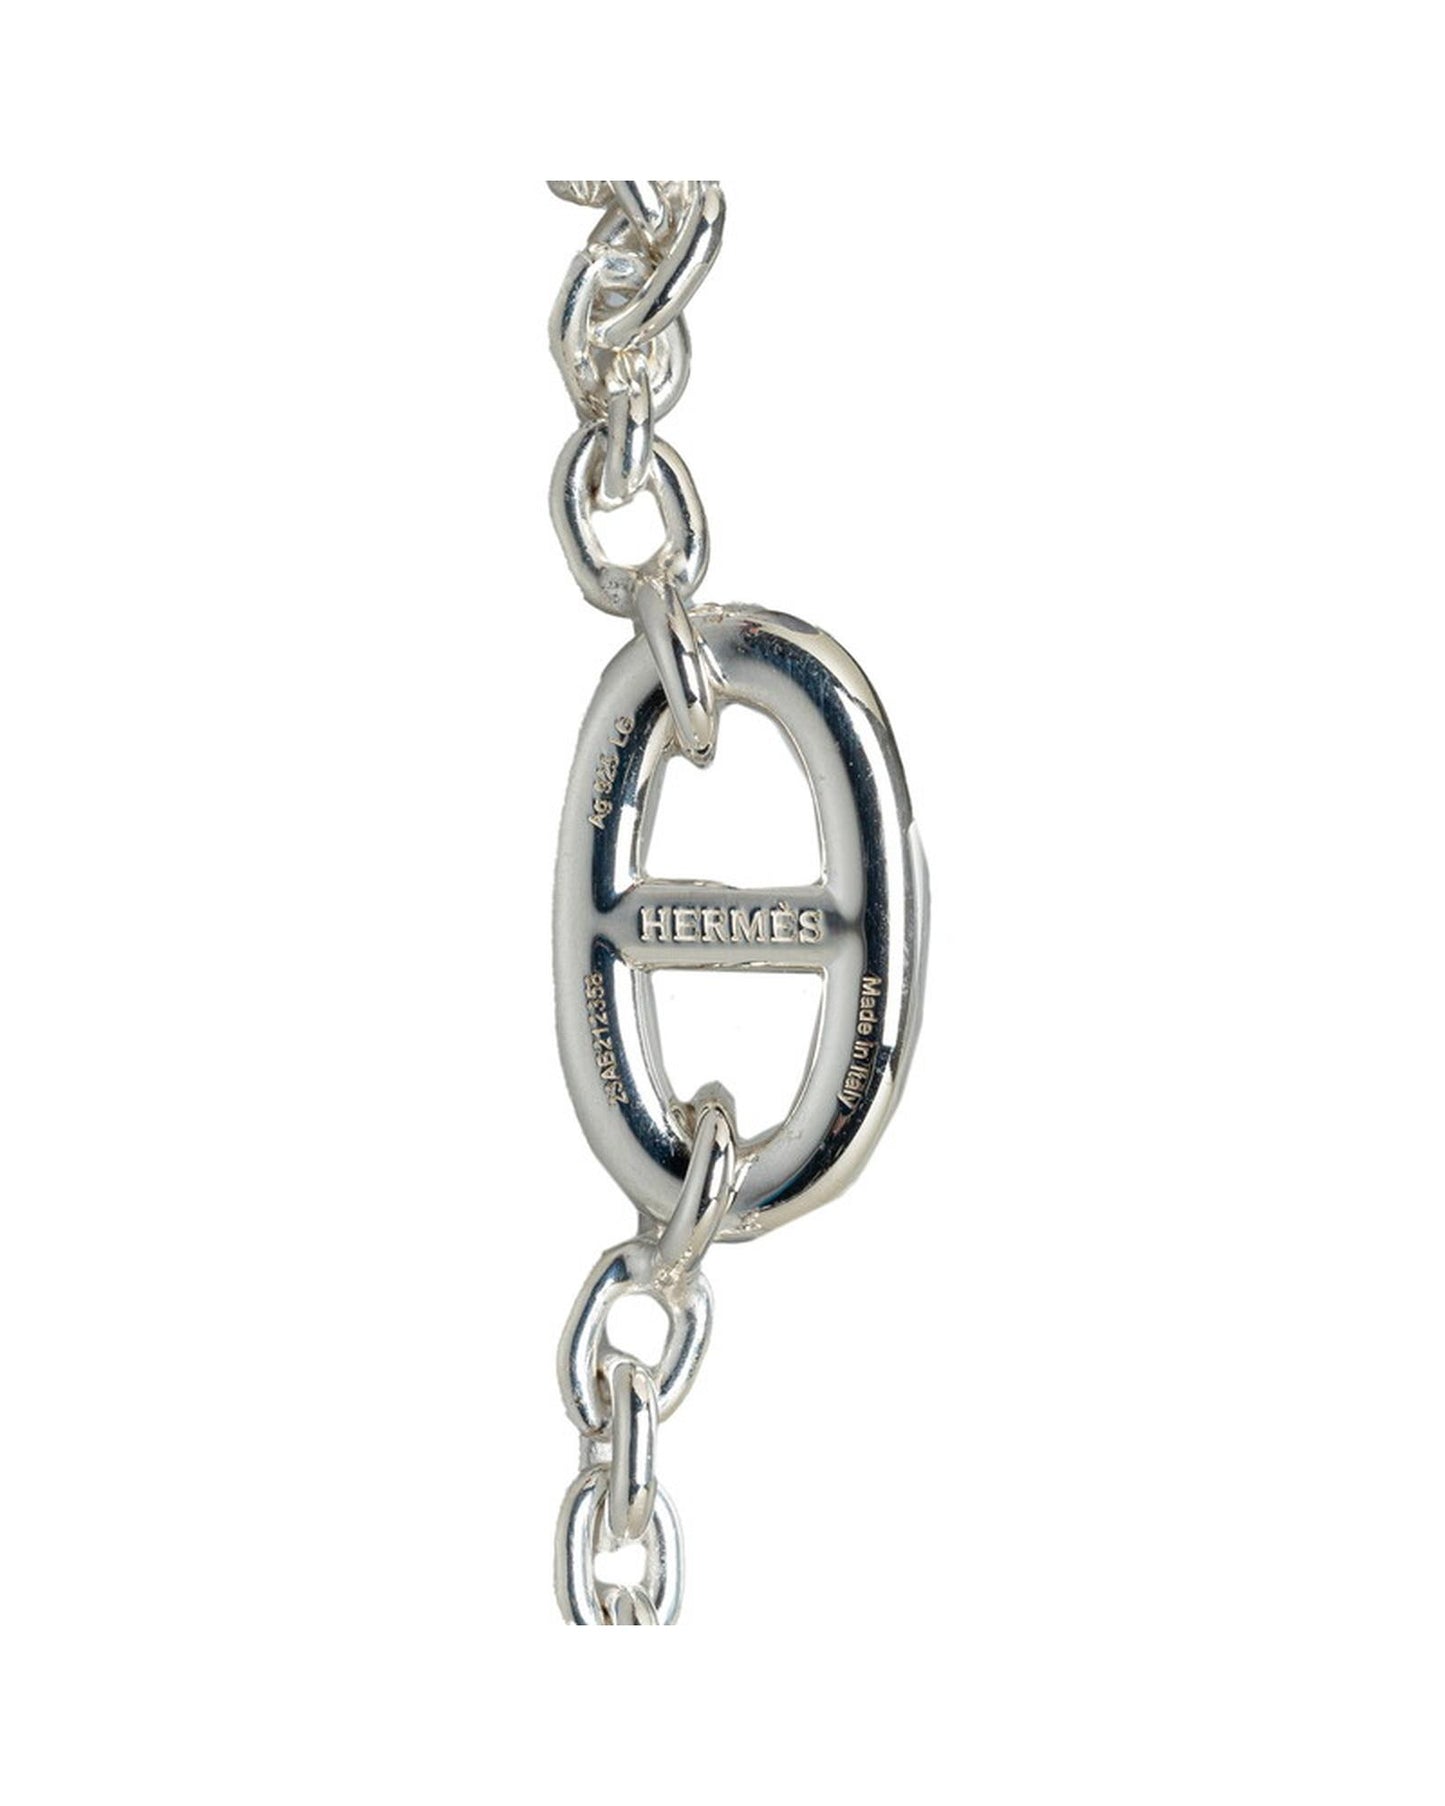 Hermes Women's Silver Farandole Bracelet Jewelry - Excellent Condition in Silver